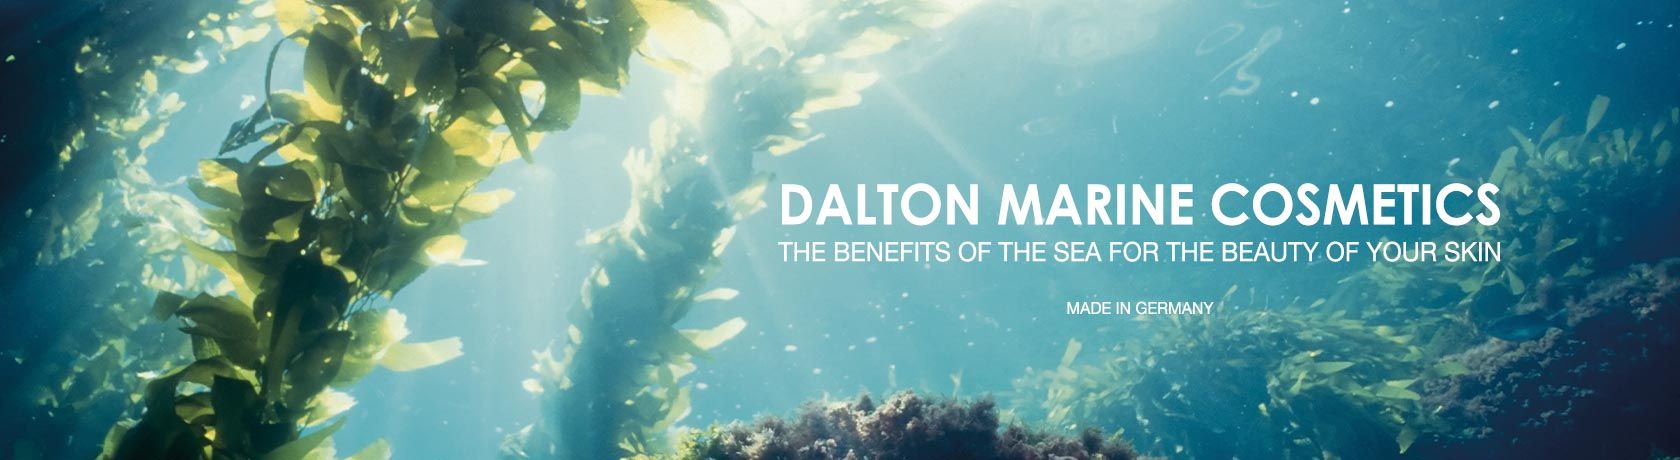 Dalton marine cosmetics